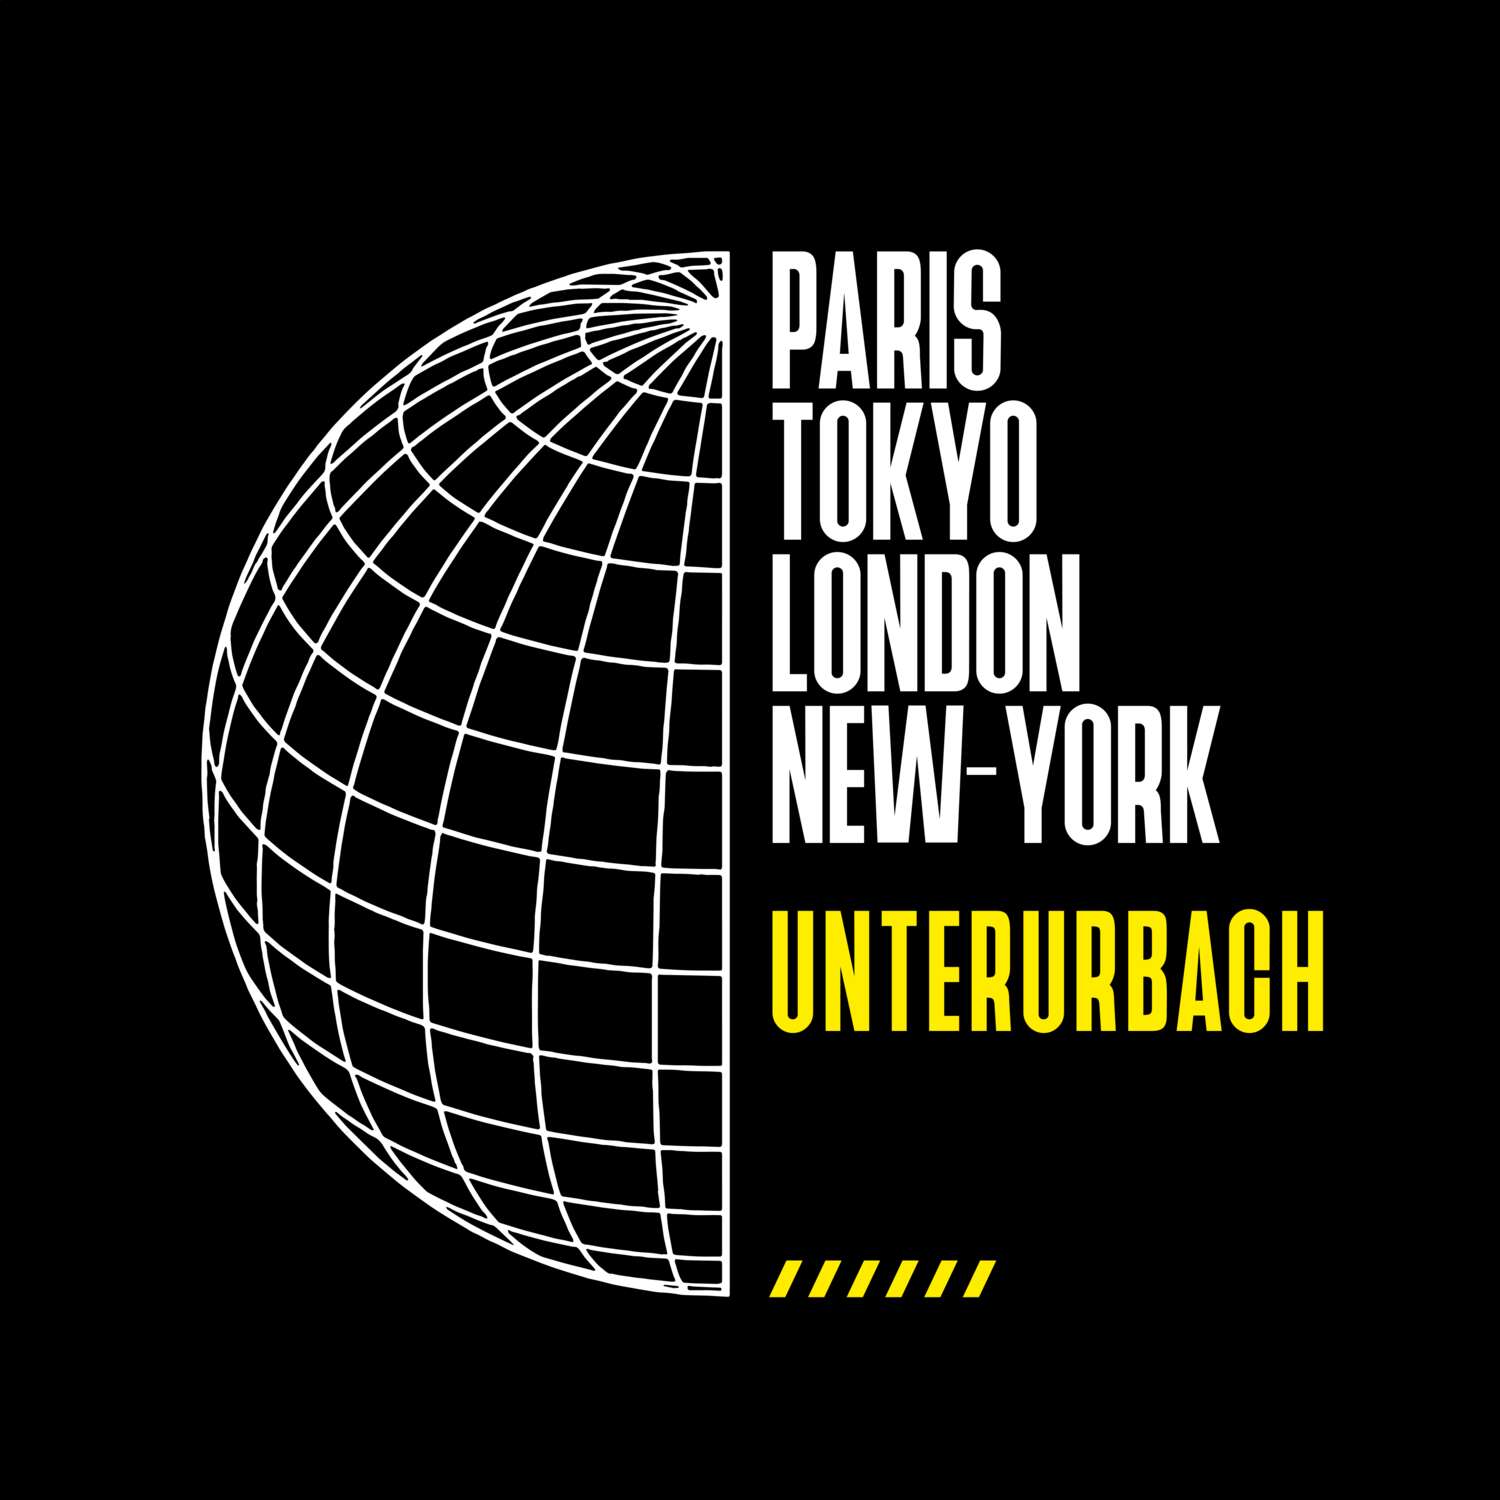 Unterurbach T-Shirt »Paris Tokyo London«